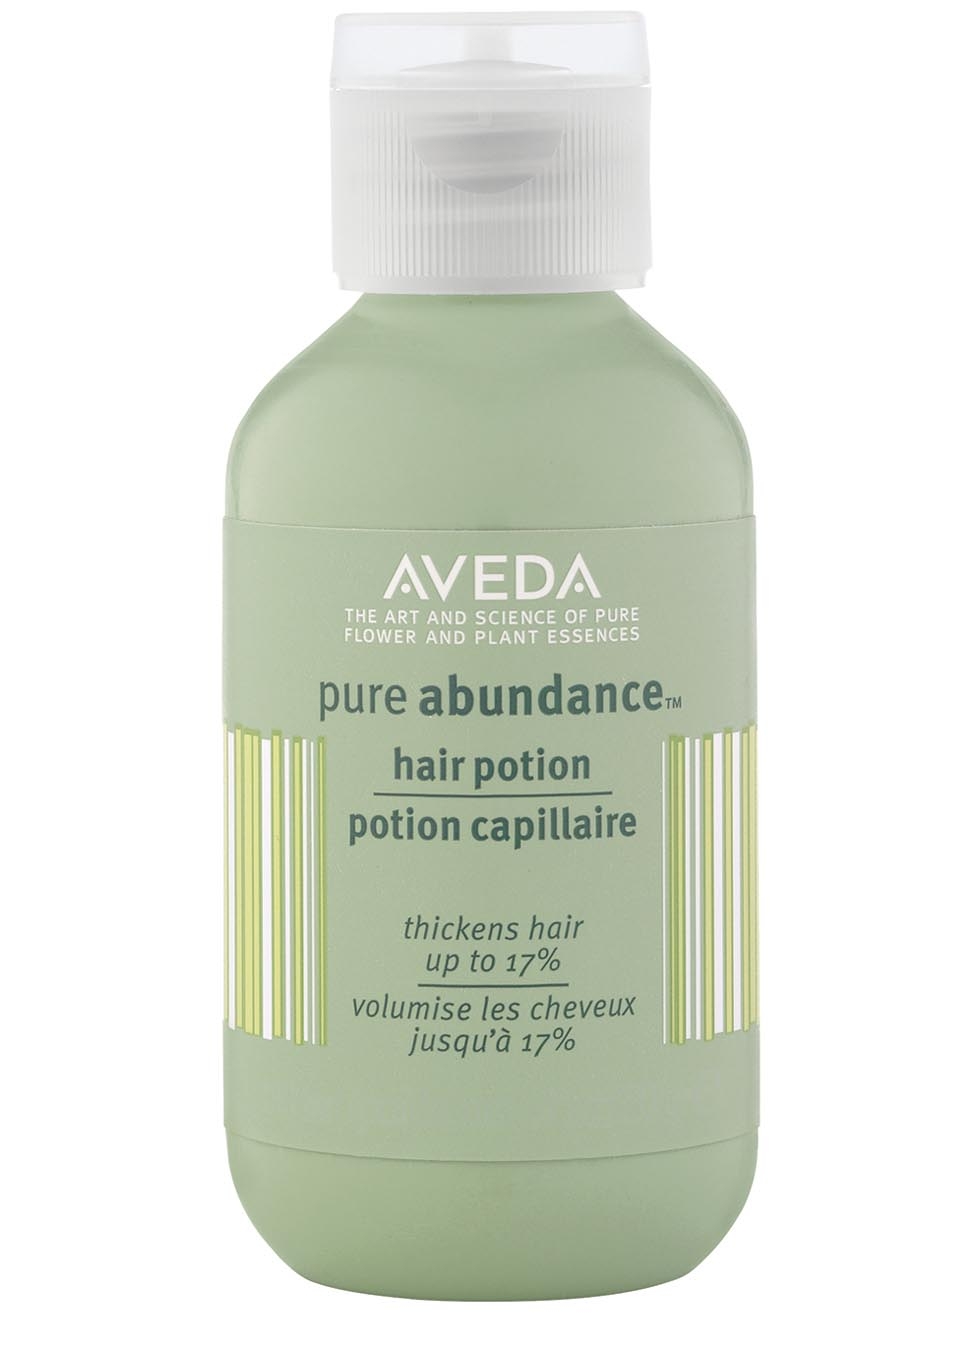 Pure Abundance™ Hair Potion 20g